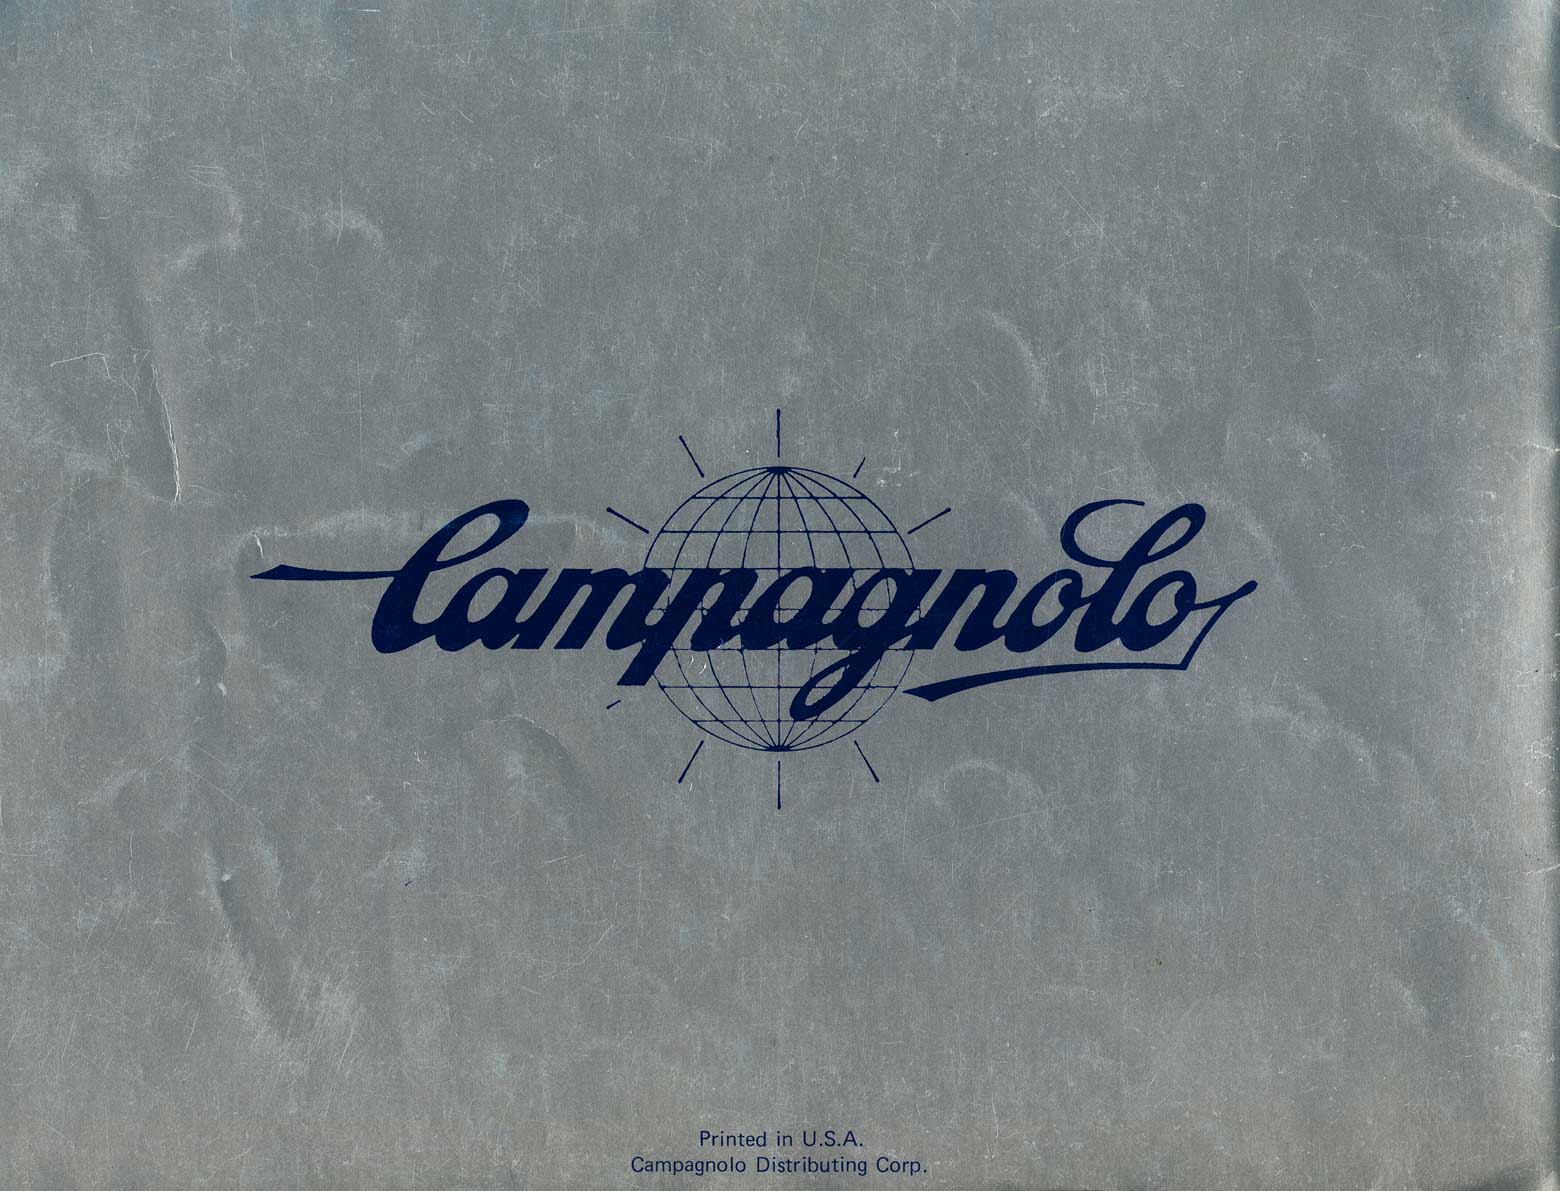 Campagnolo - Catalog 17a rear cover main image